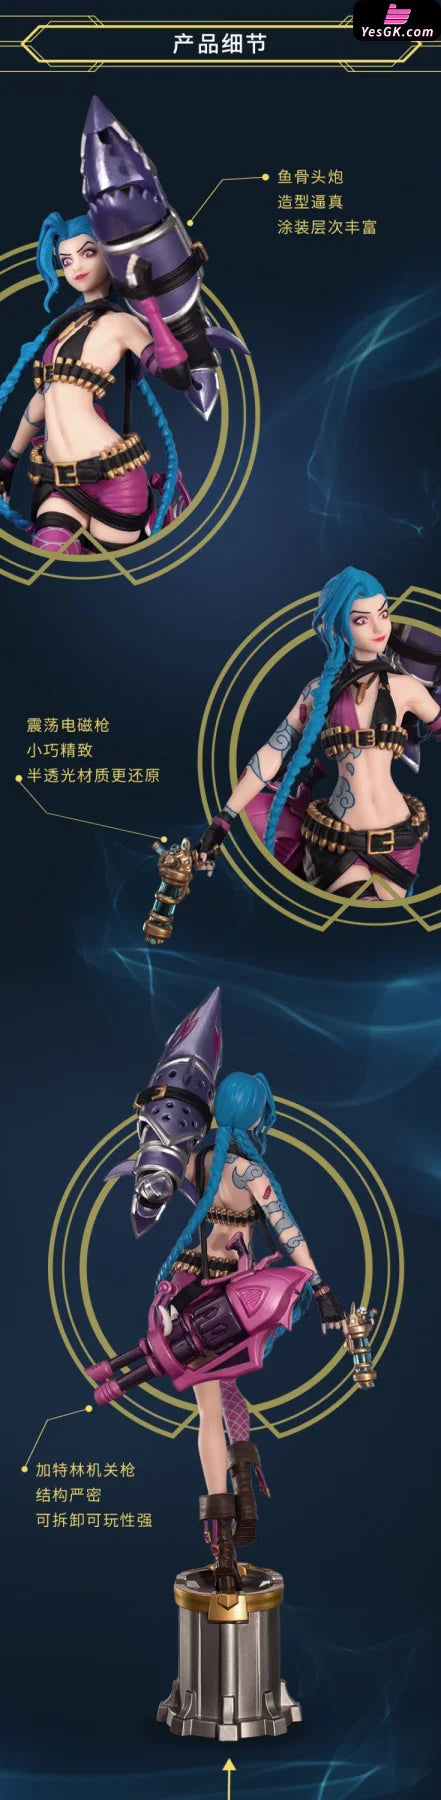 League Of Legends - The Loose Cannon Jinx 3D Decoration Pen Statue Zhongshouyou [In Stock]